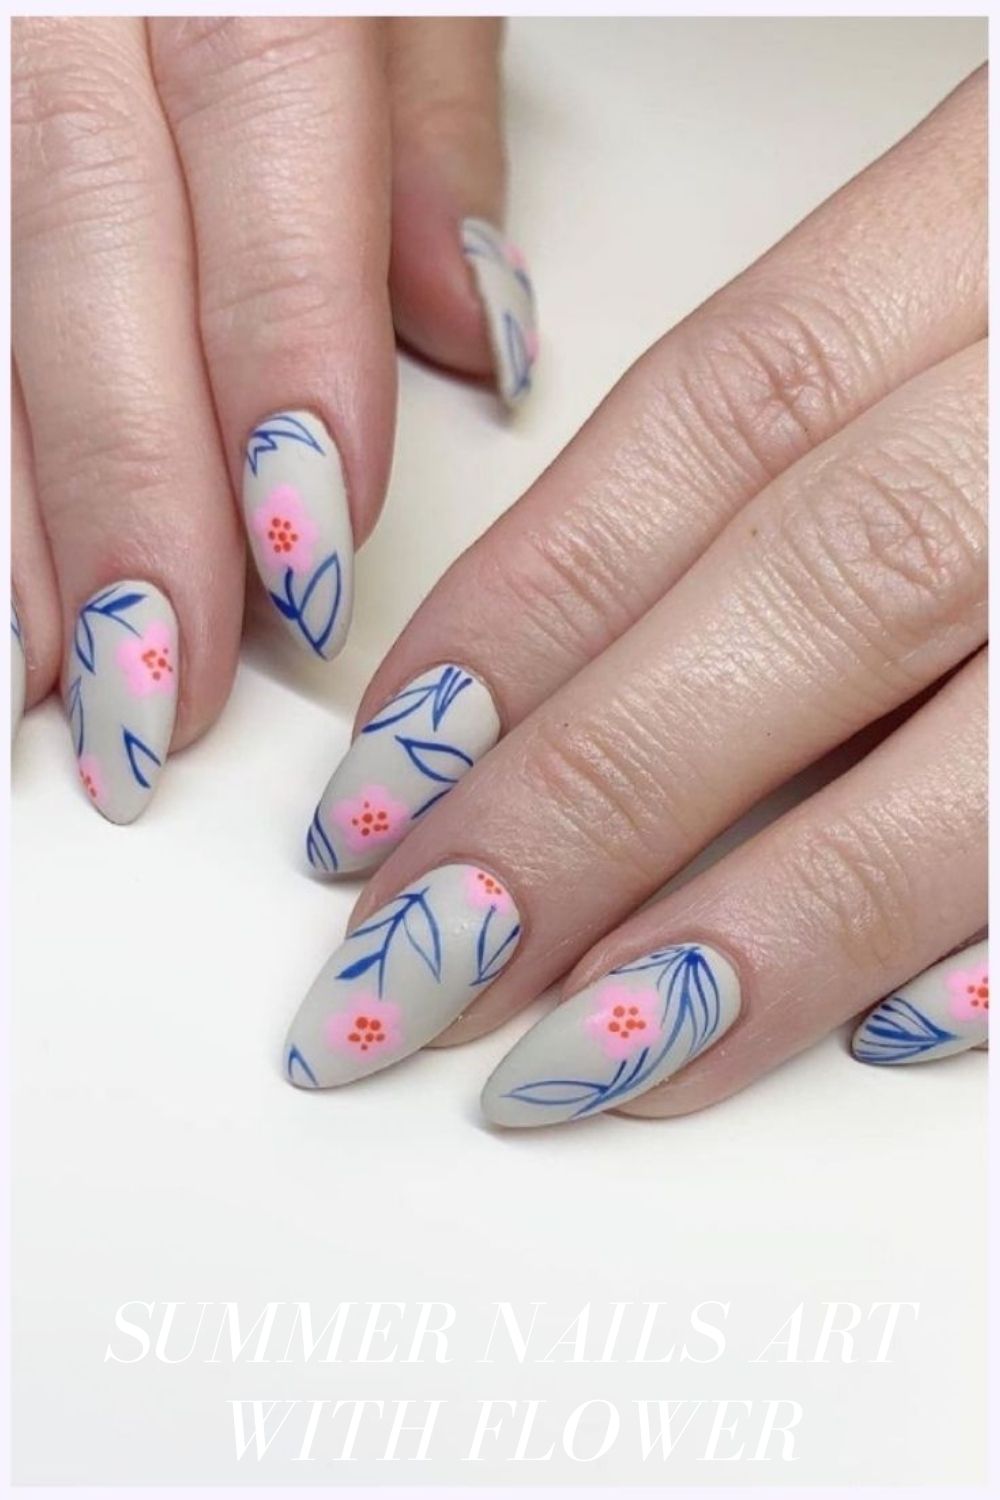 Classy summer nails